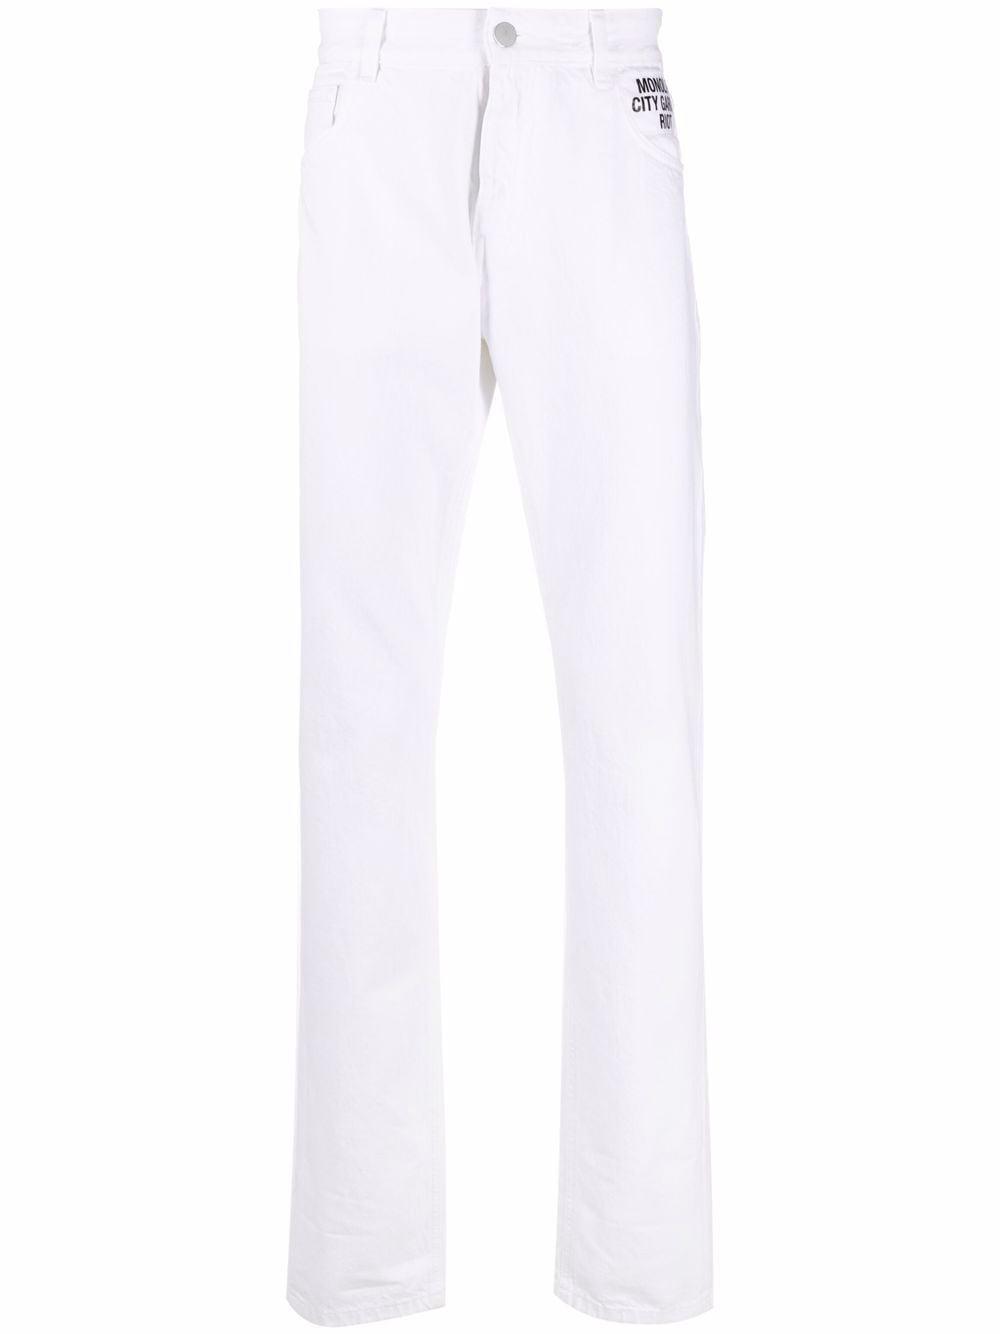 Raf Simons Slim-fit Denim Jeans in White for Men - Save 40% - Lyst